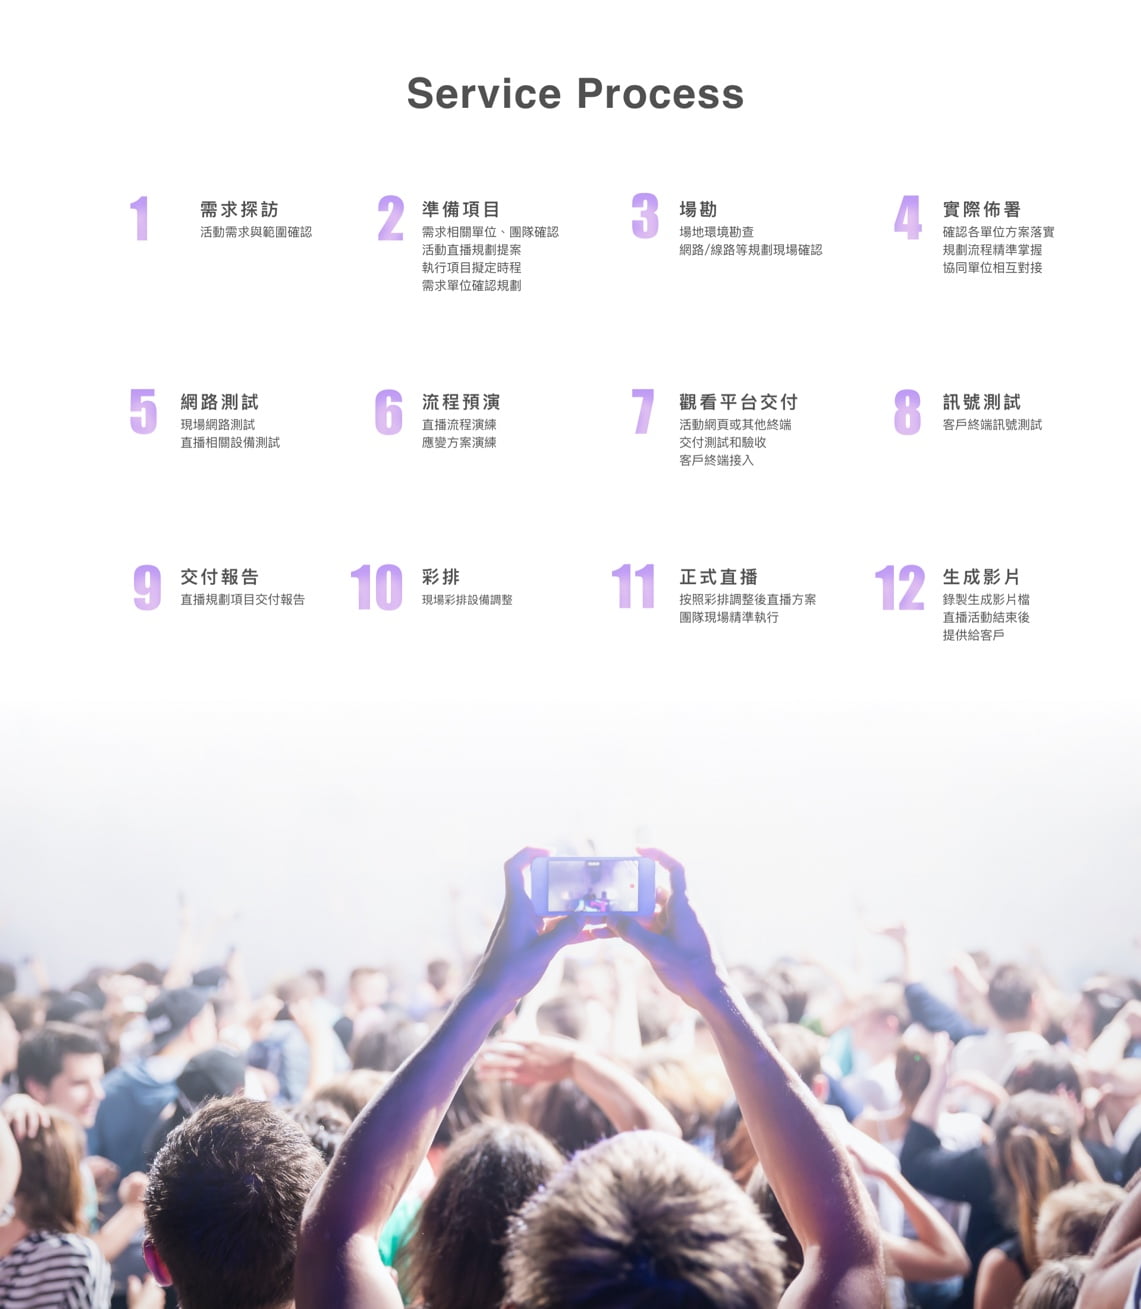 Service Process